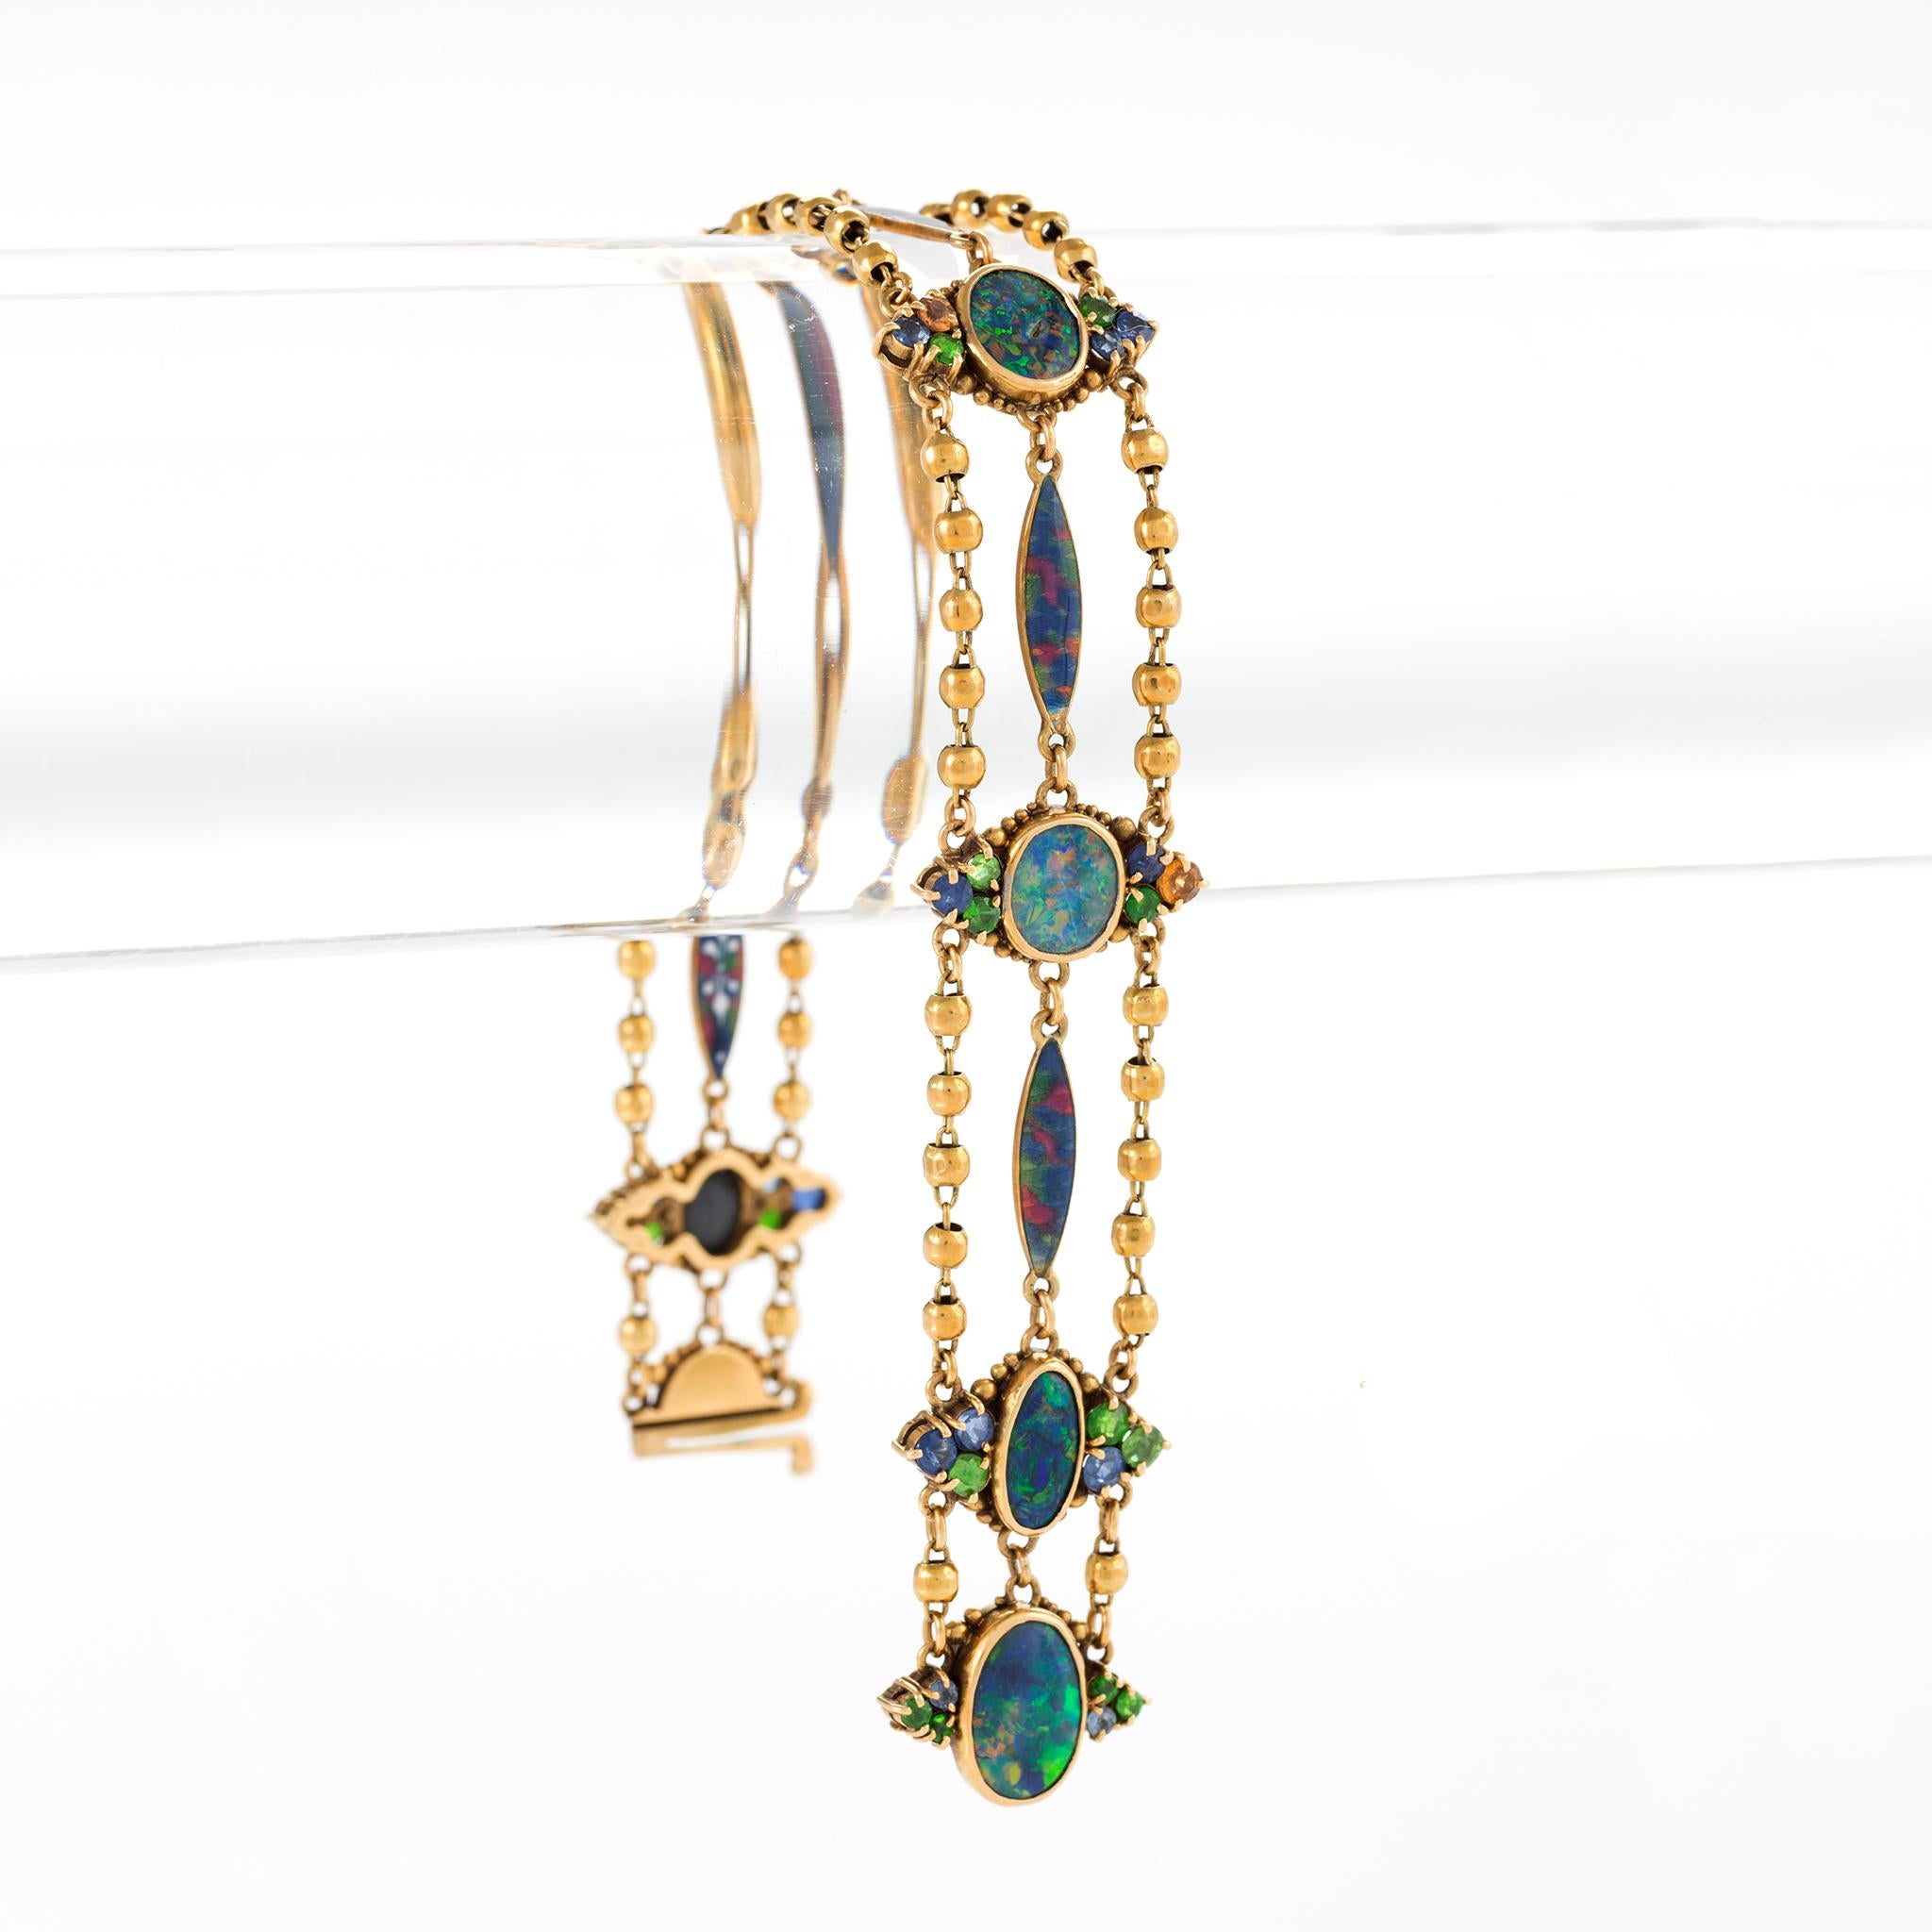 Oval Cut Louis Comfort Tiffany Black Opal and Enamel Necklace and Bracelet Set